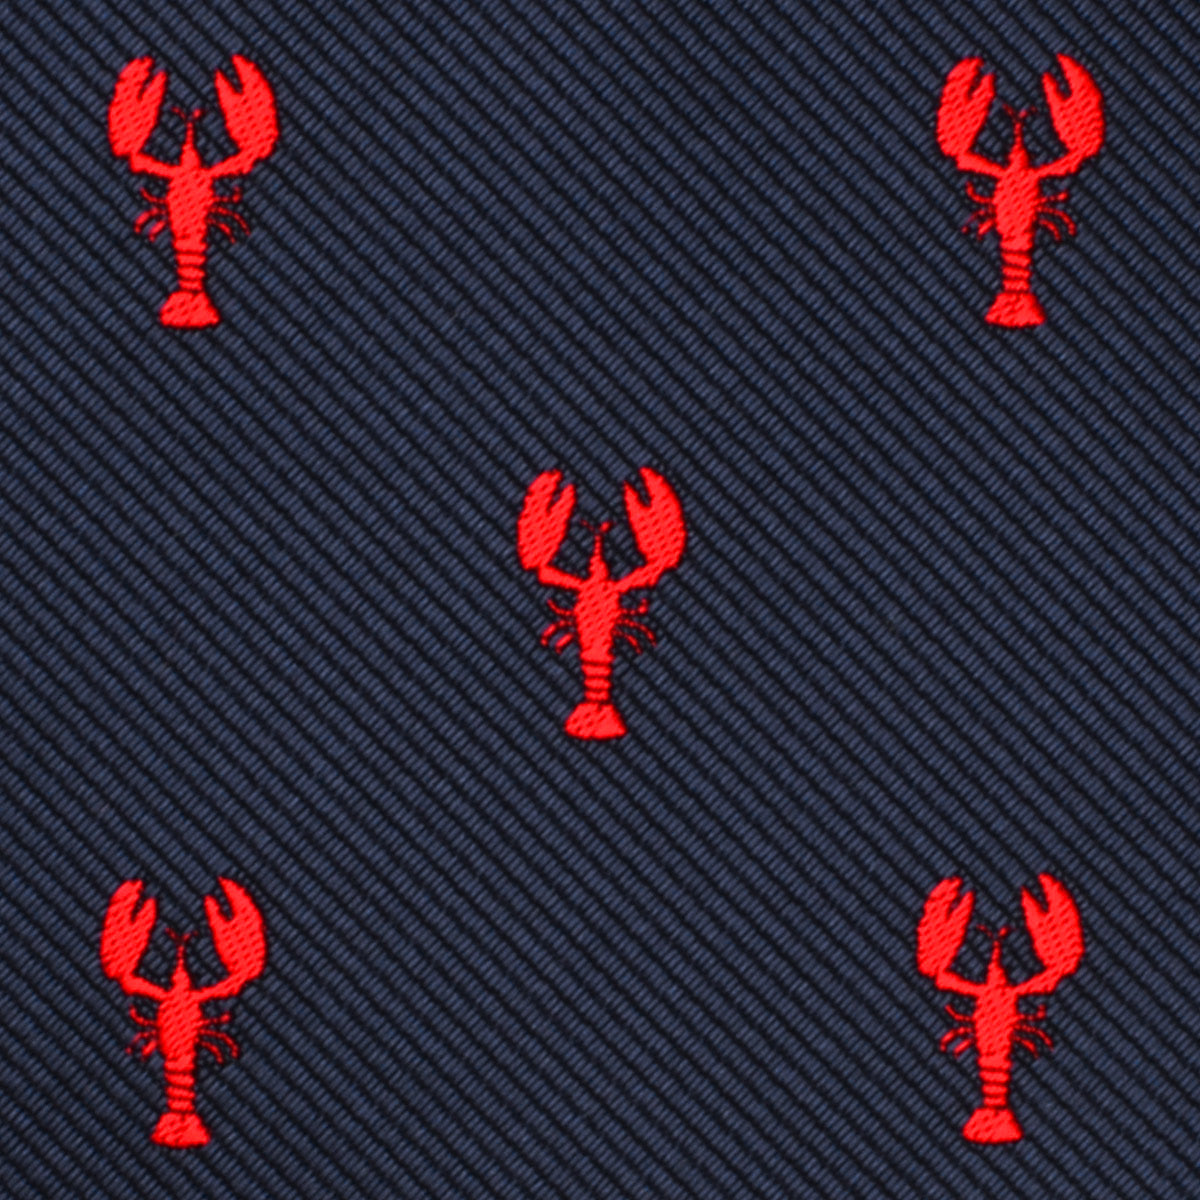 Red Lobster Skinny Tie Fabric